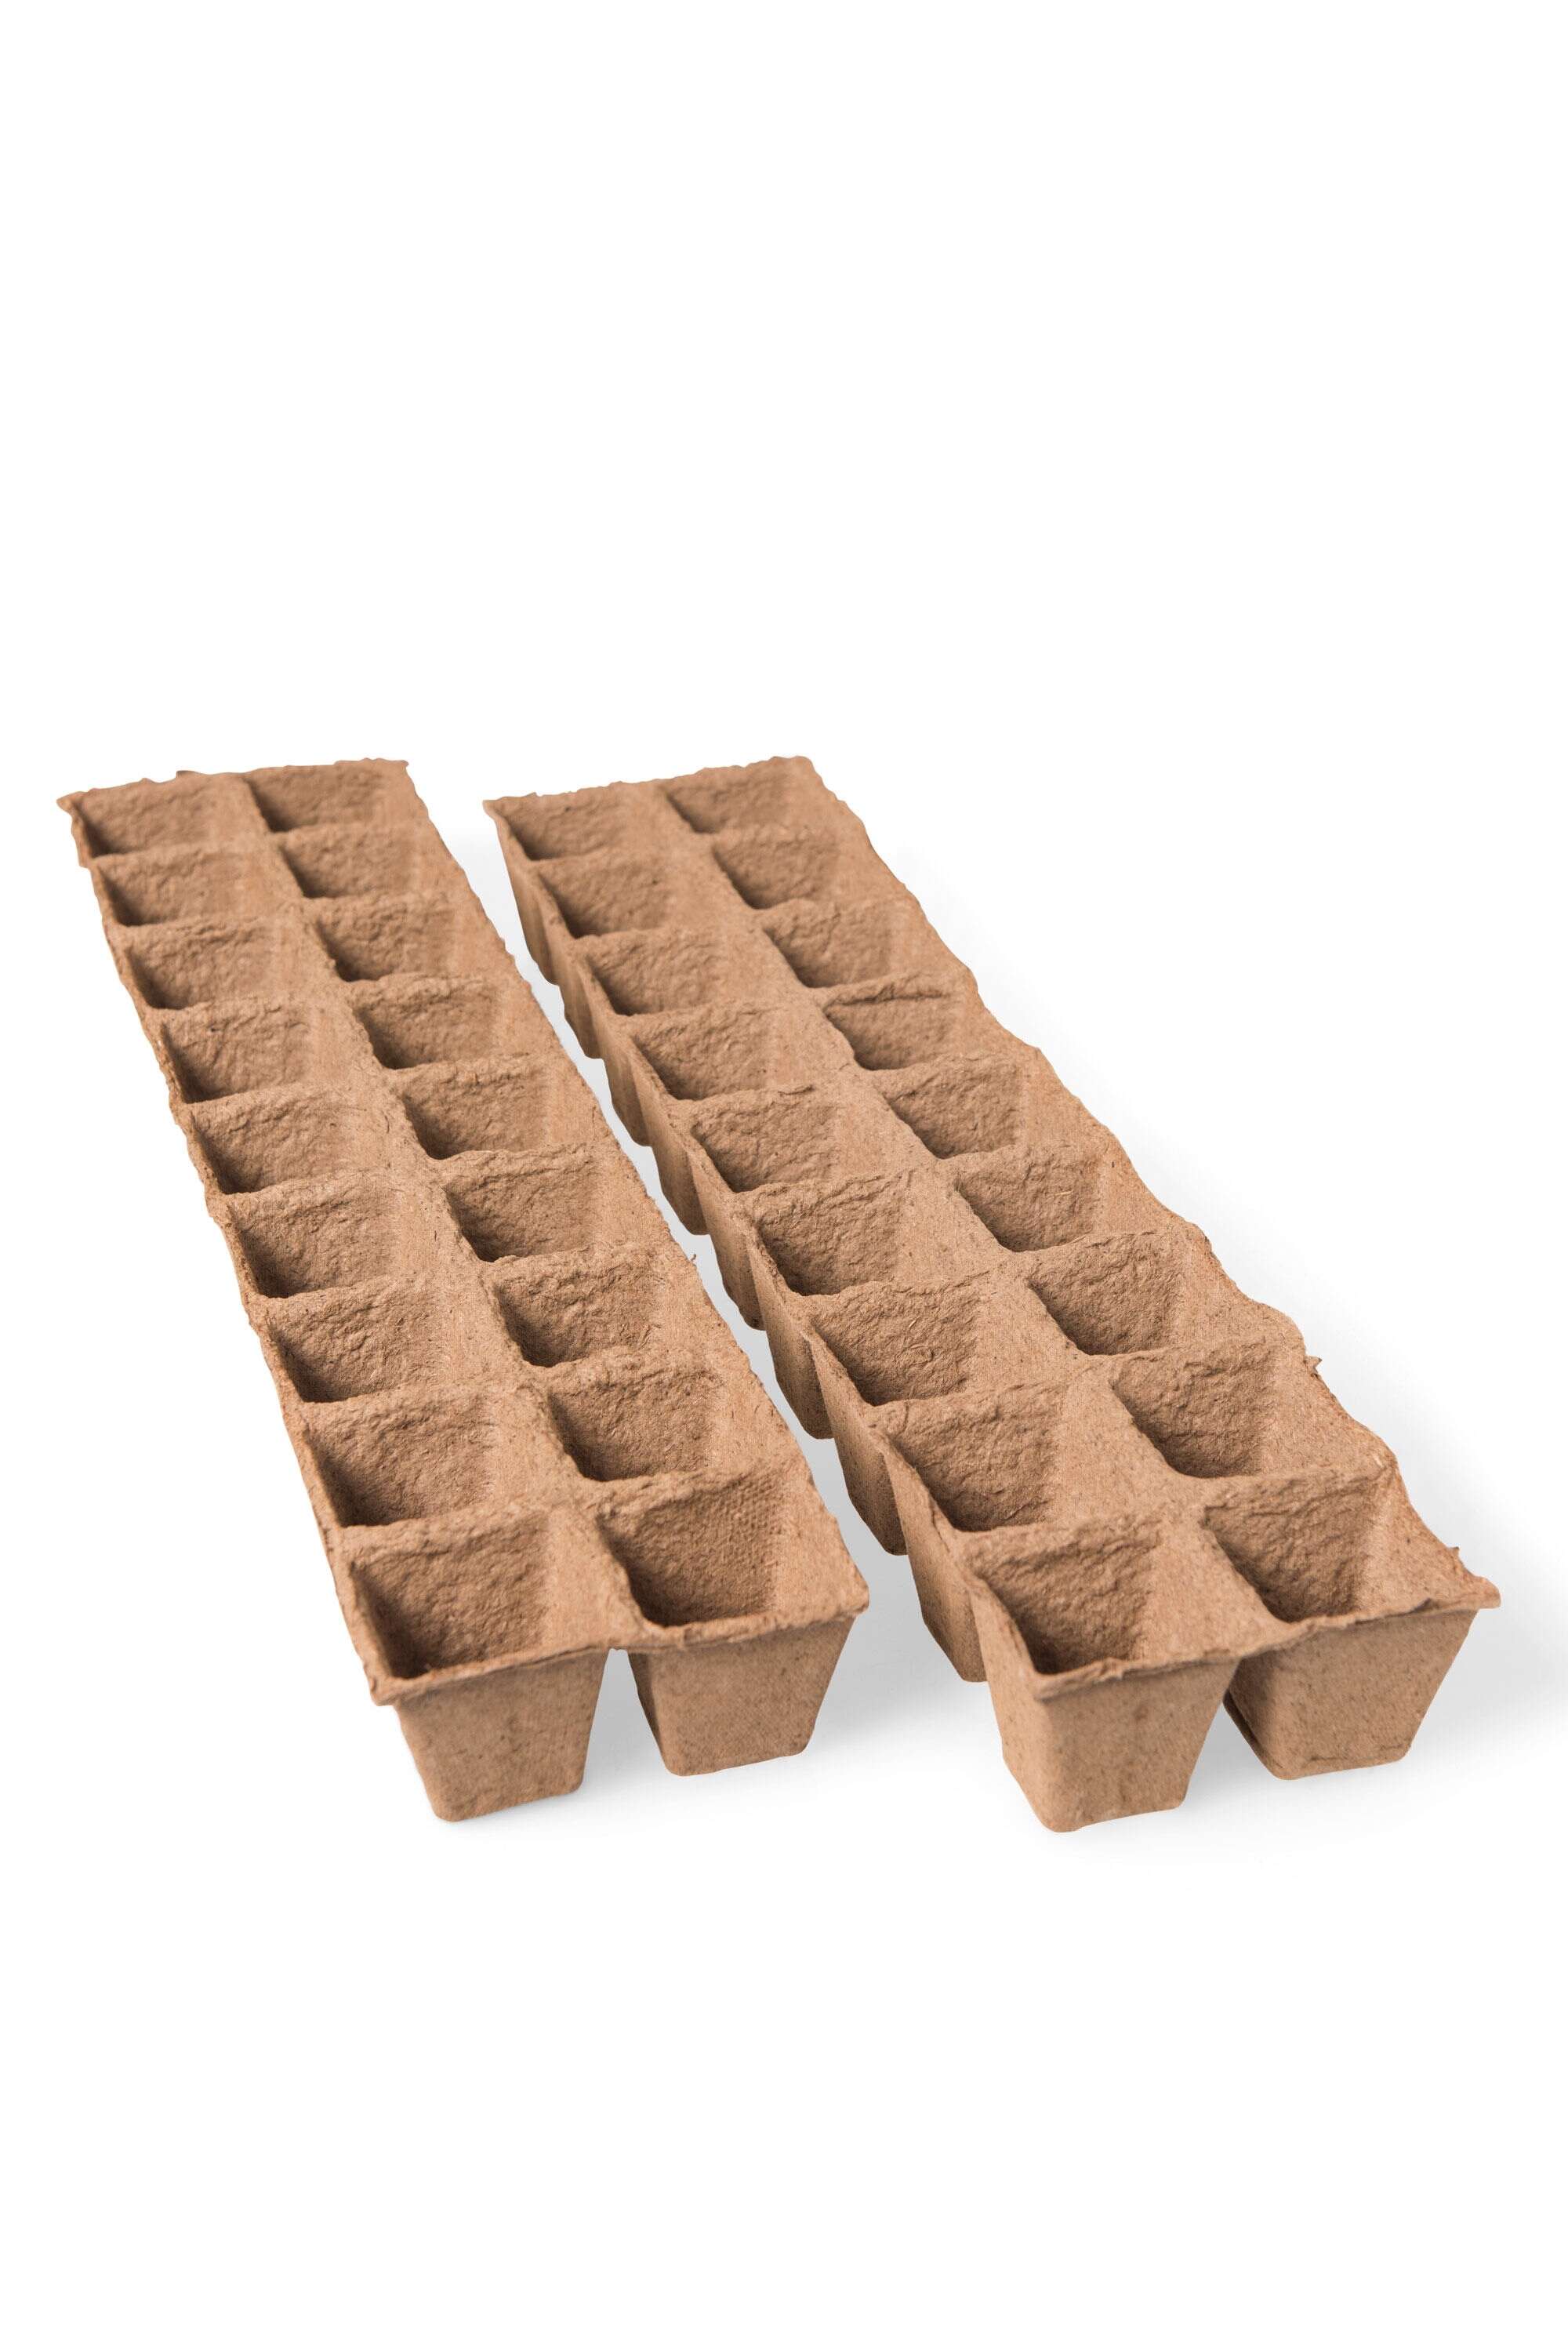 36 Packs Peat Pots Seed Starter Trays 360 Cells Biodegradable Seedling Pots 